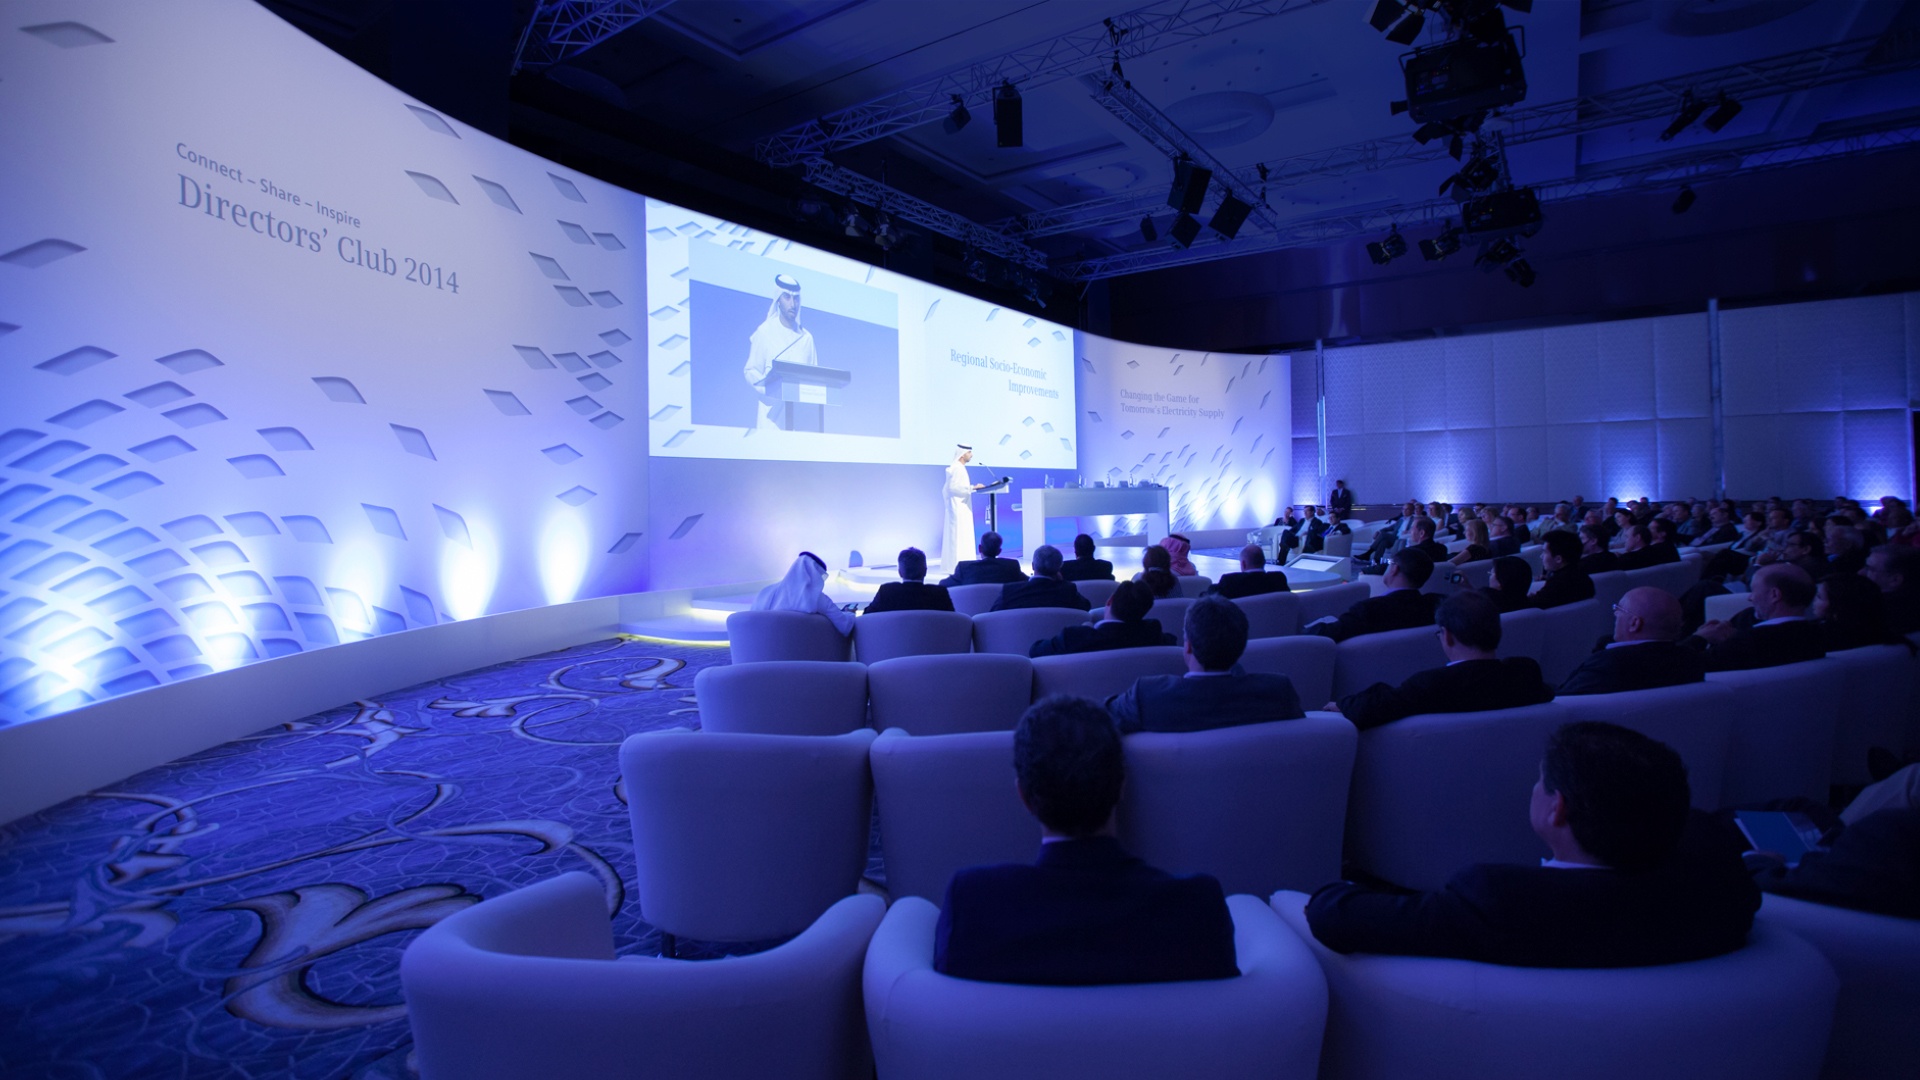 Siemens Directors' Club Konferenz Abu Dhabi